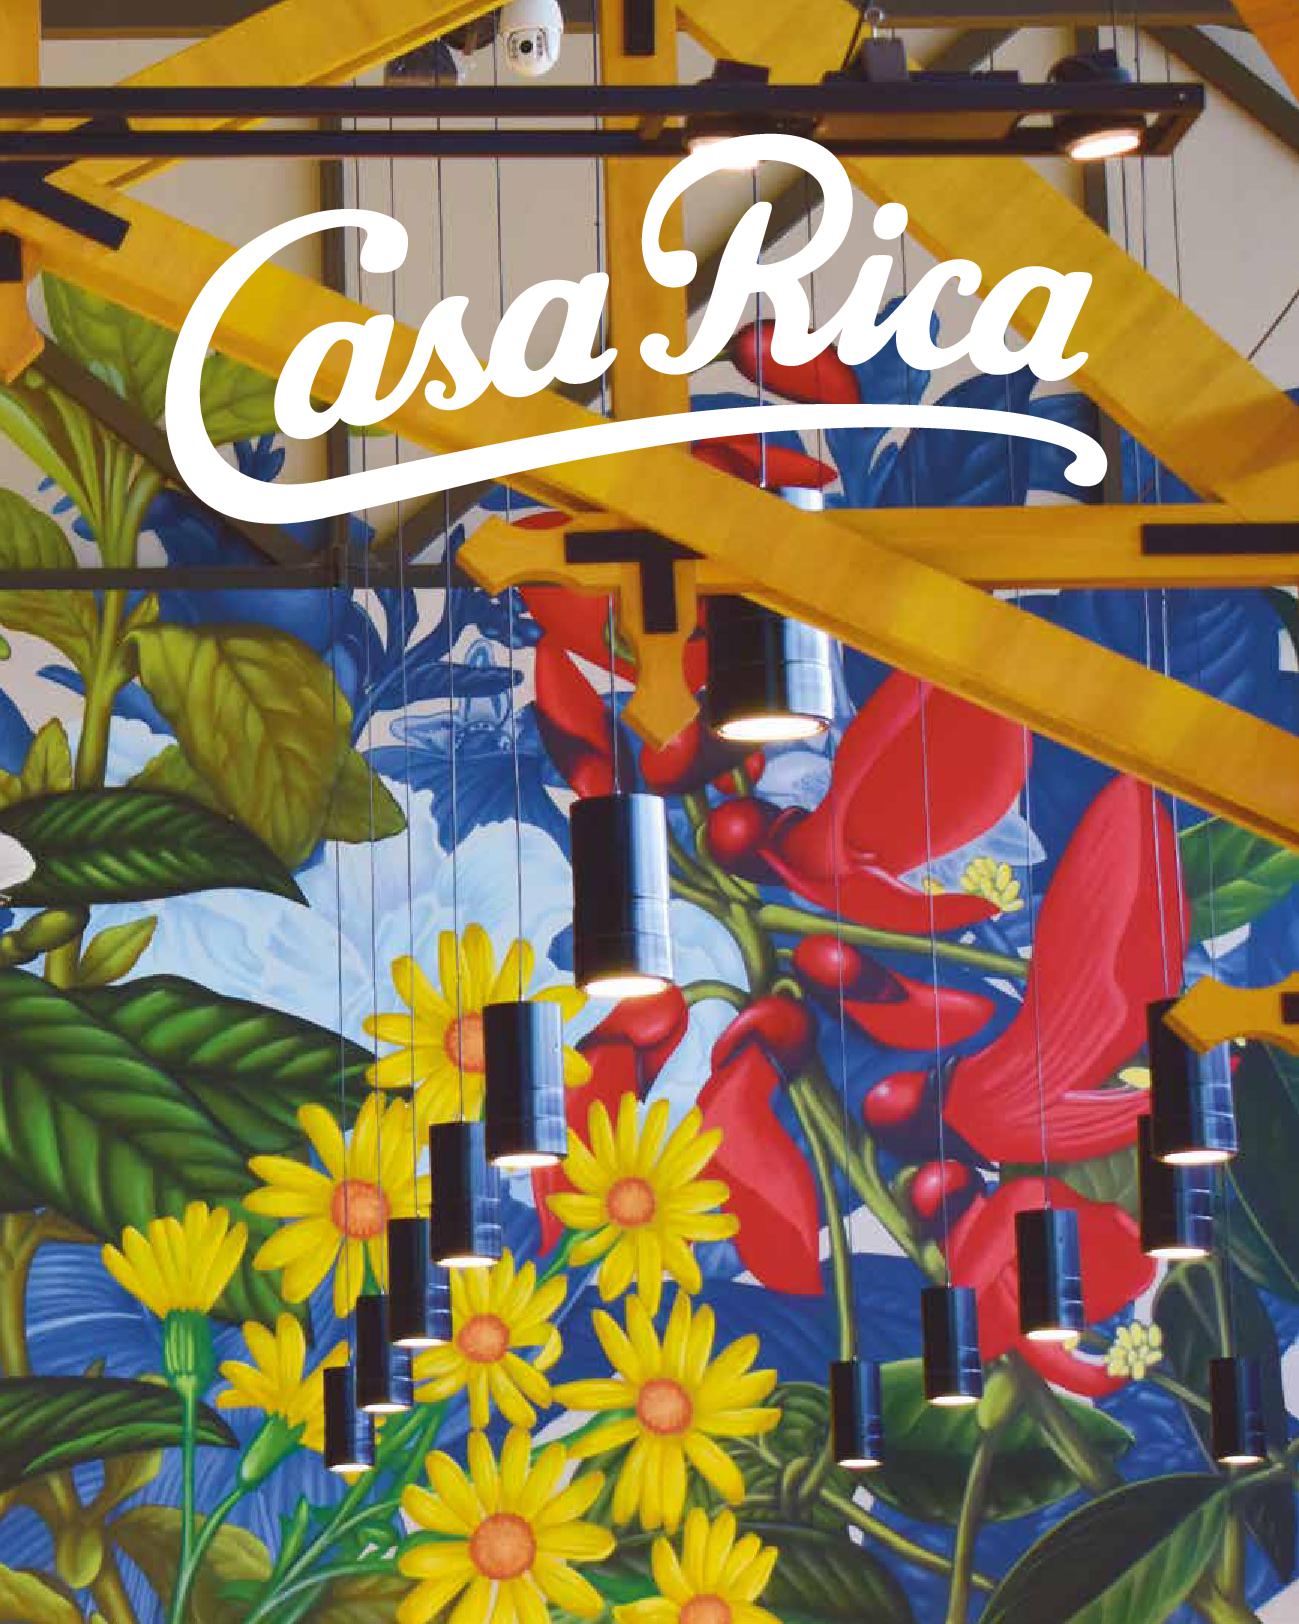 Revista Casa Rica